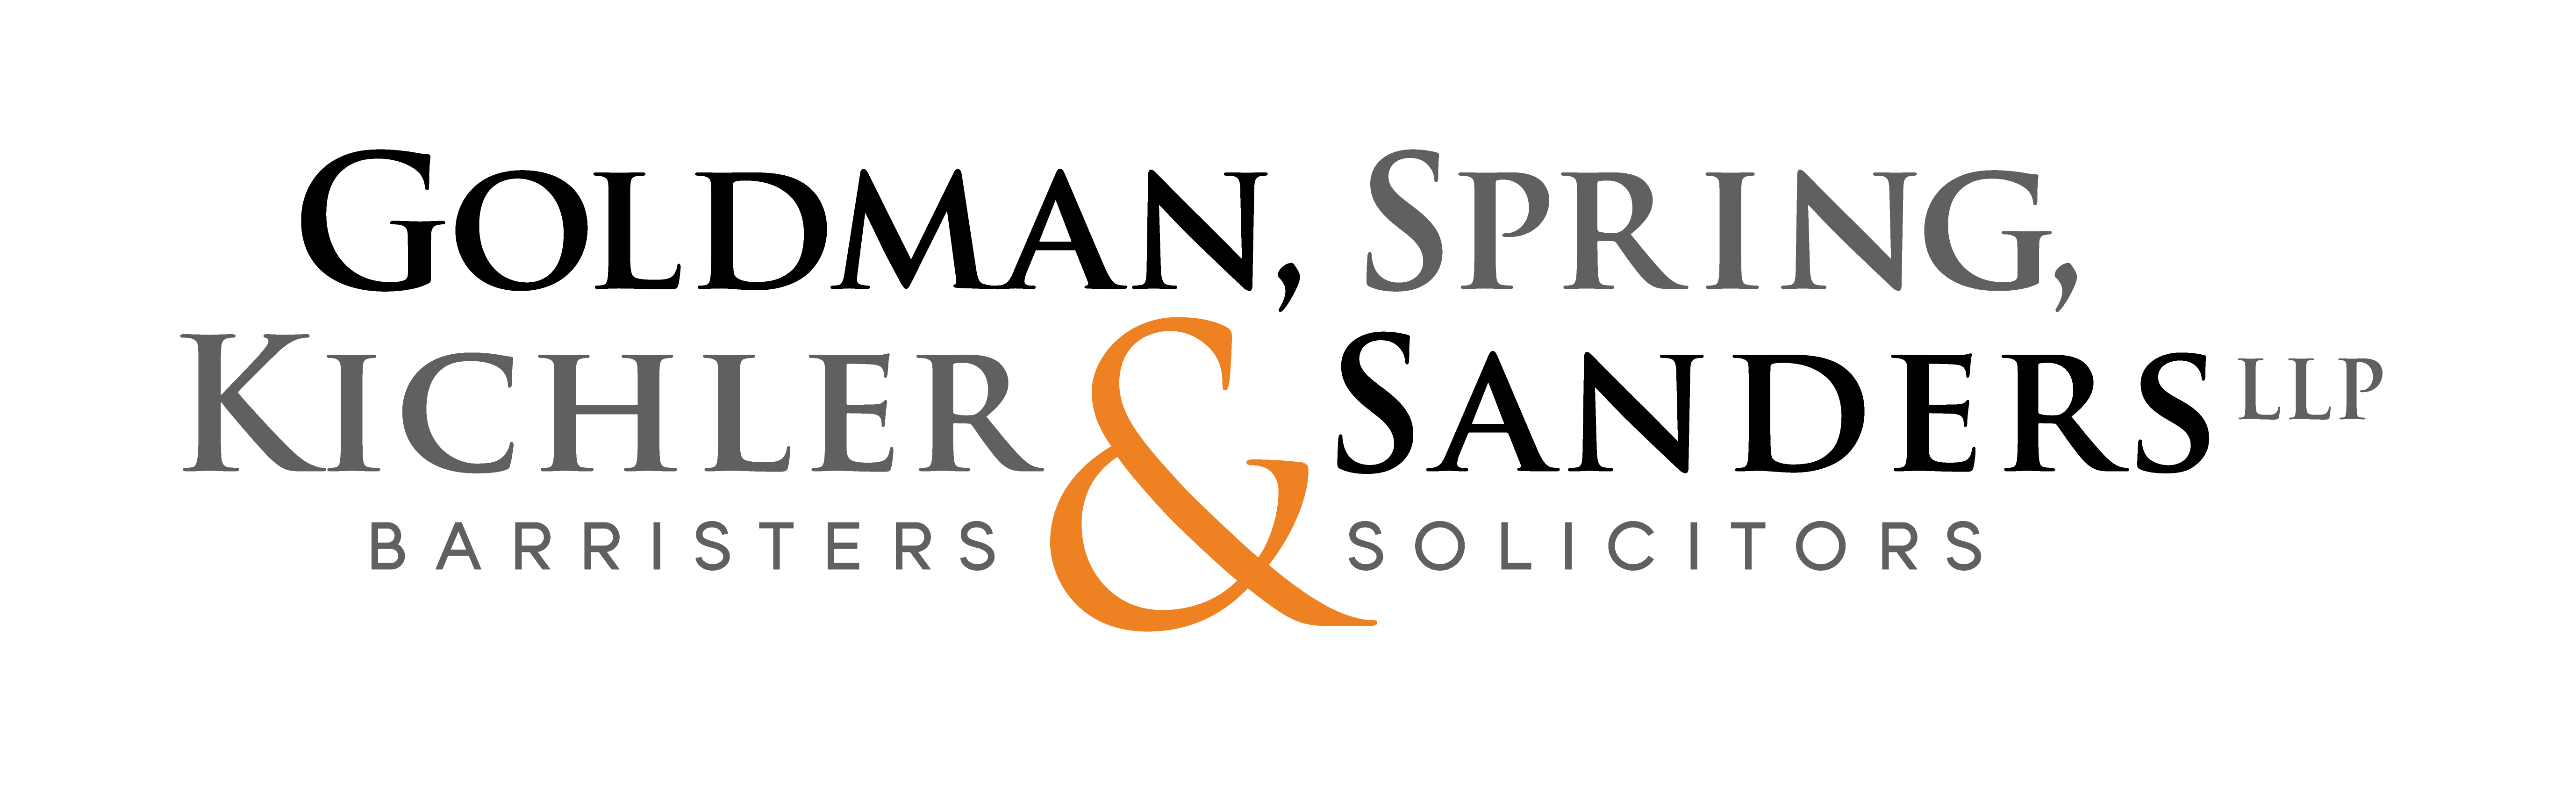 Goldman Spring Kichler Sanders Logo